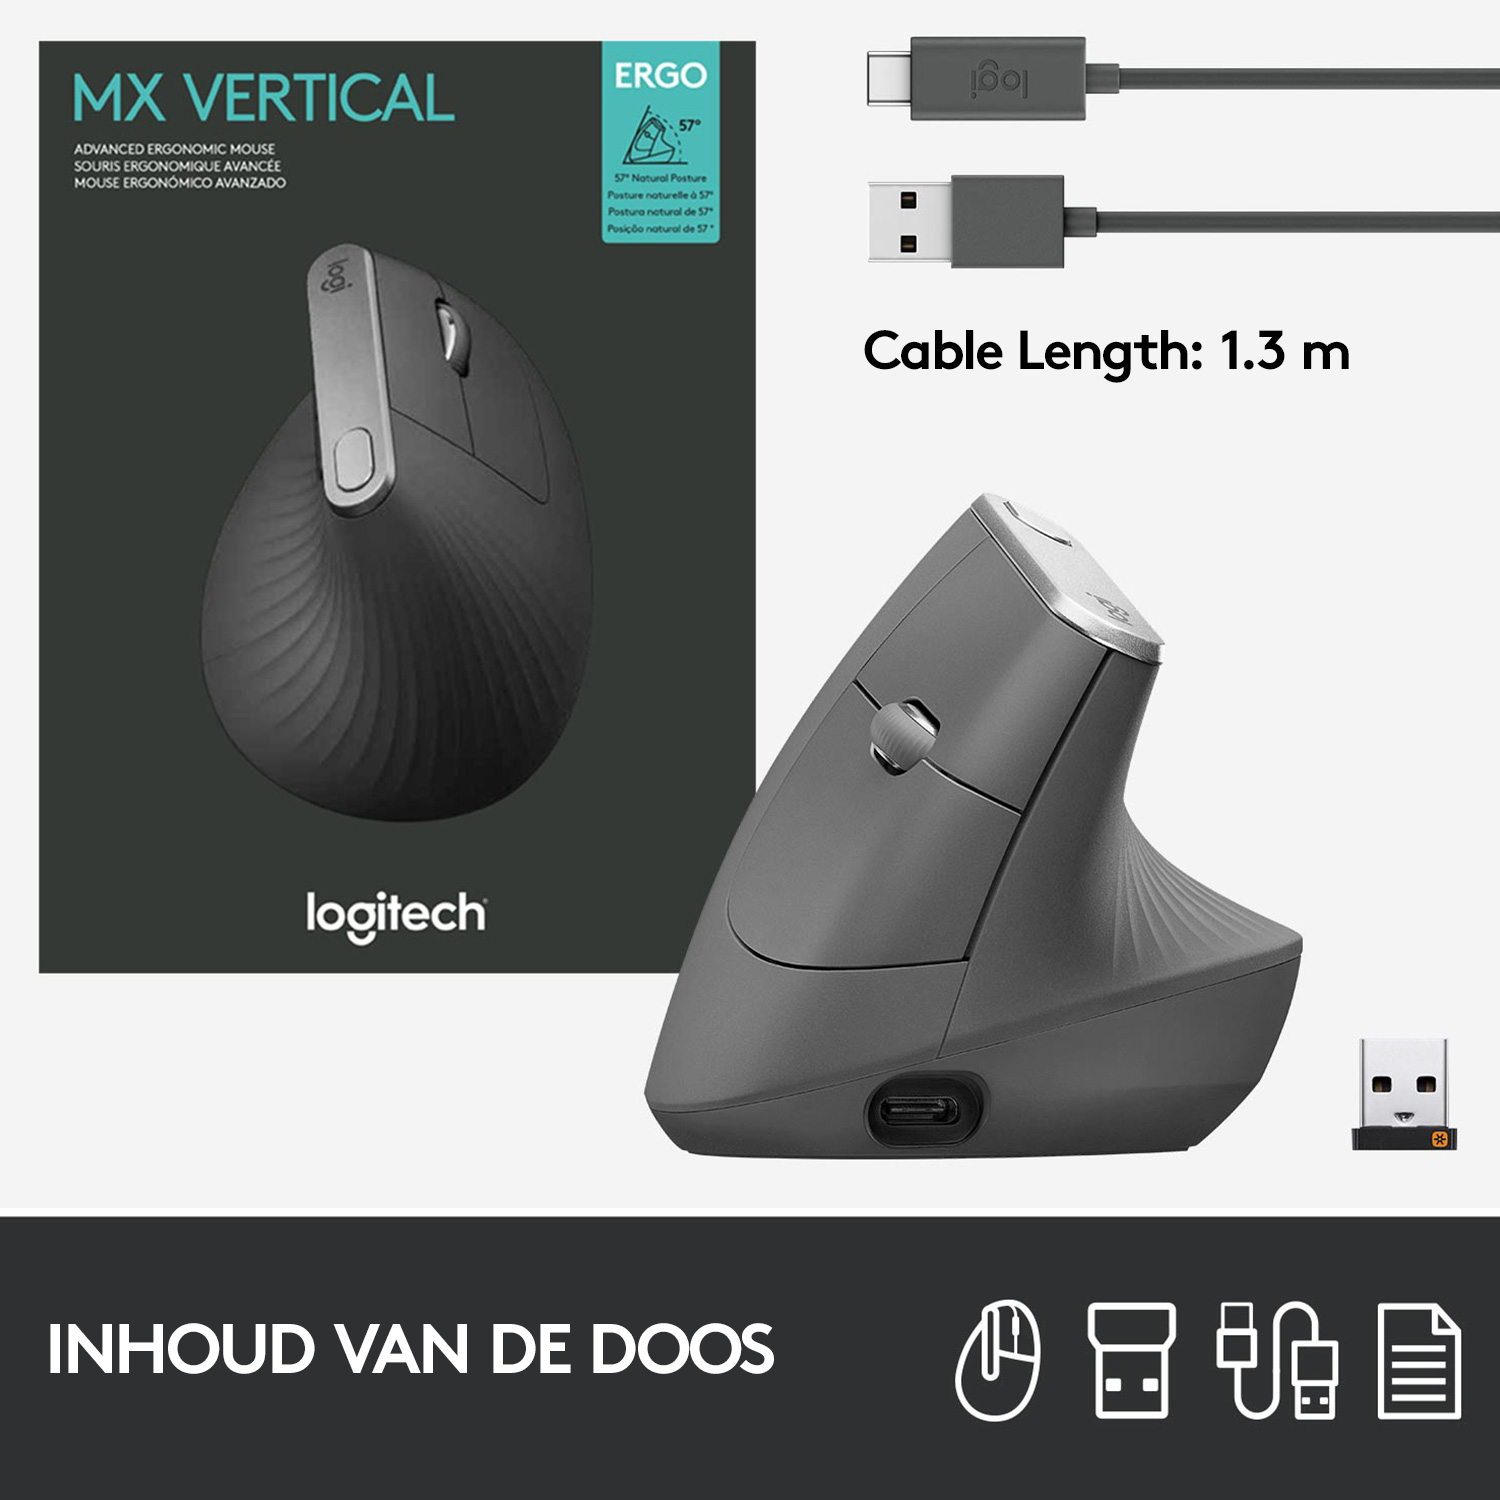 Logitech mx vertical ergo mouse graphite